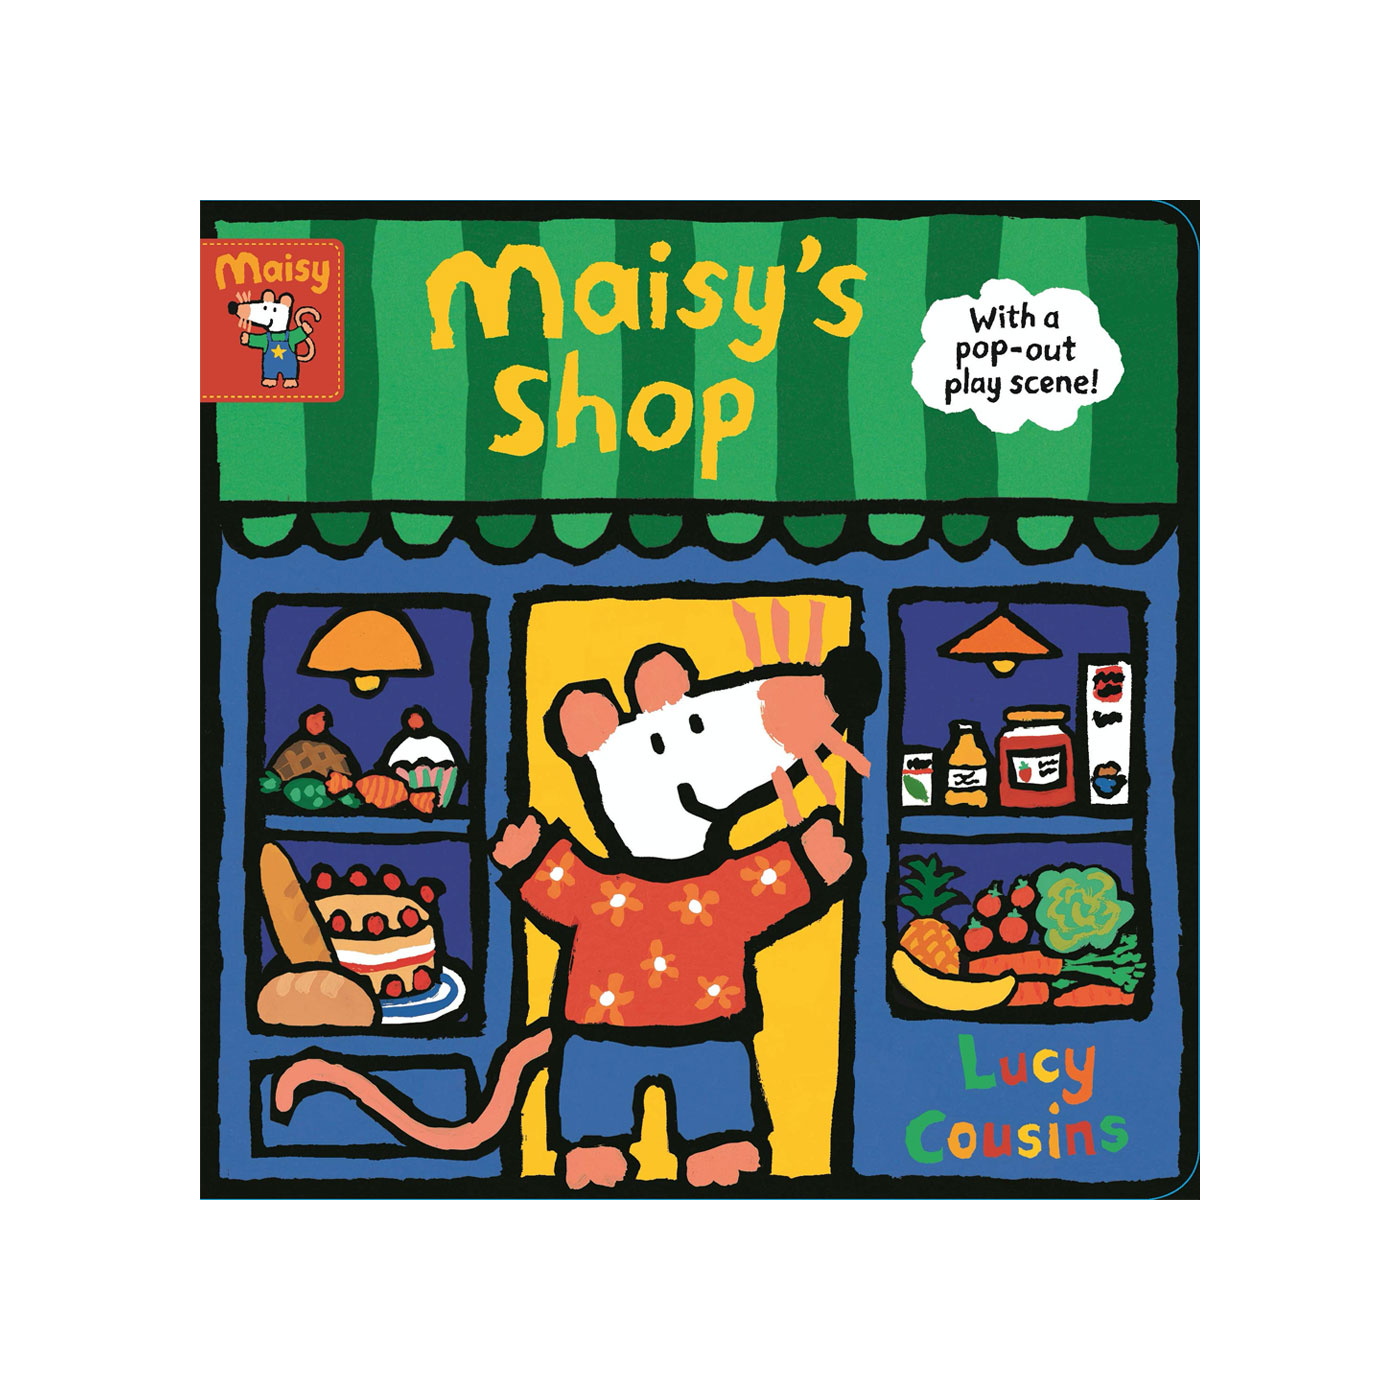  Maisy's Shop: Pop-Out Play Scene